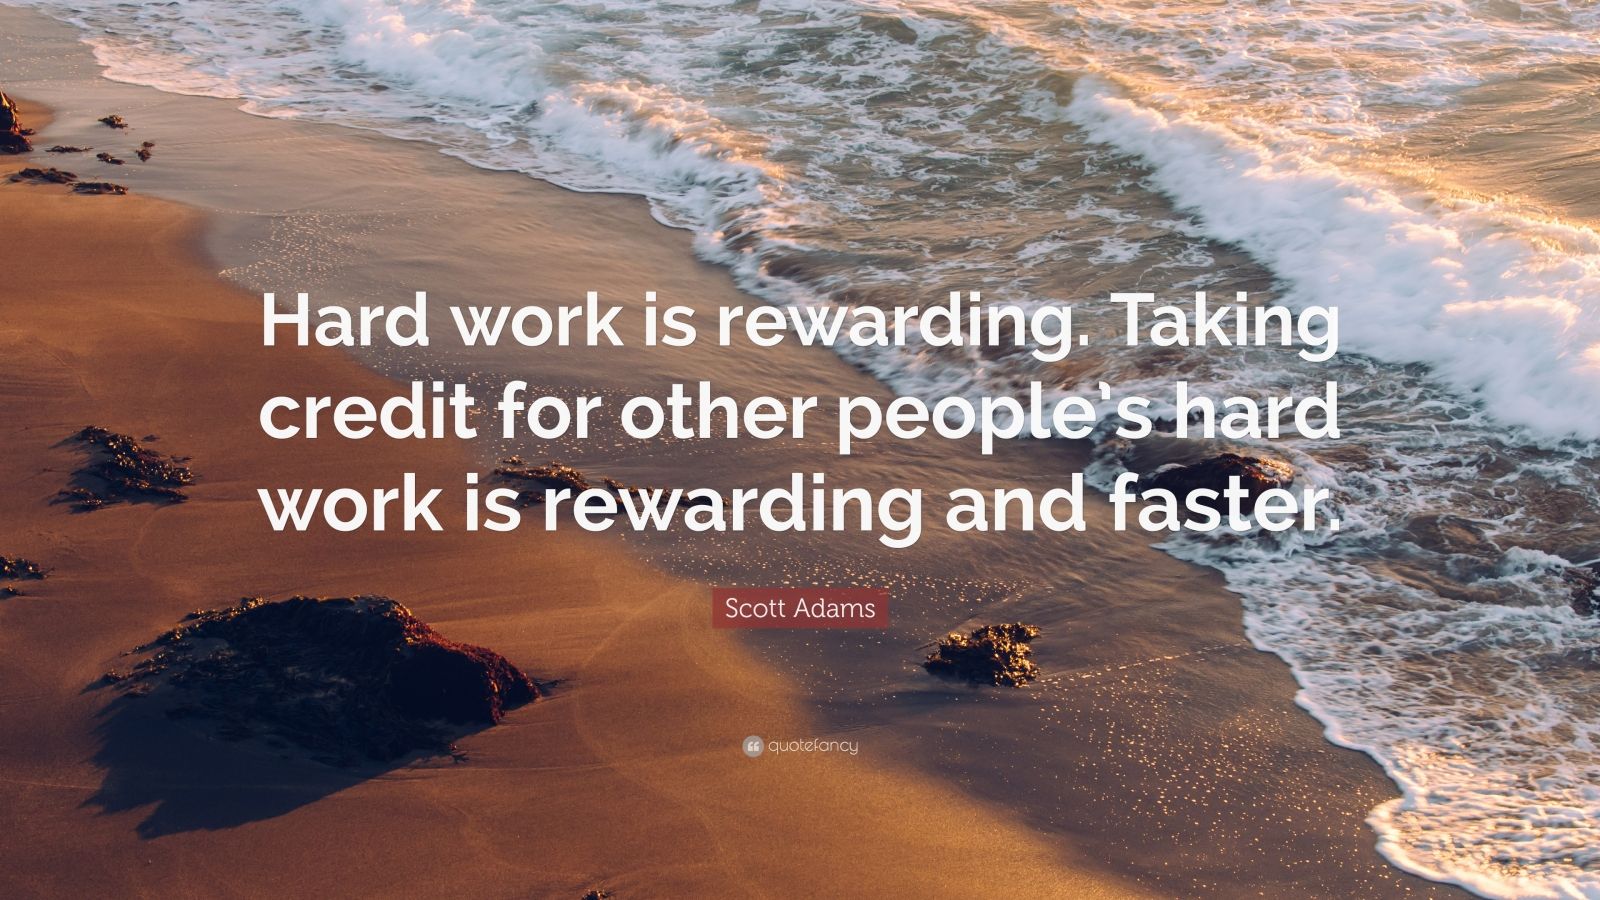 Scott Adams Quote: “Hard work is rewarding. Taking credit for other ...